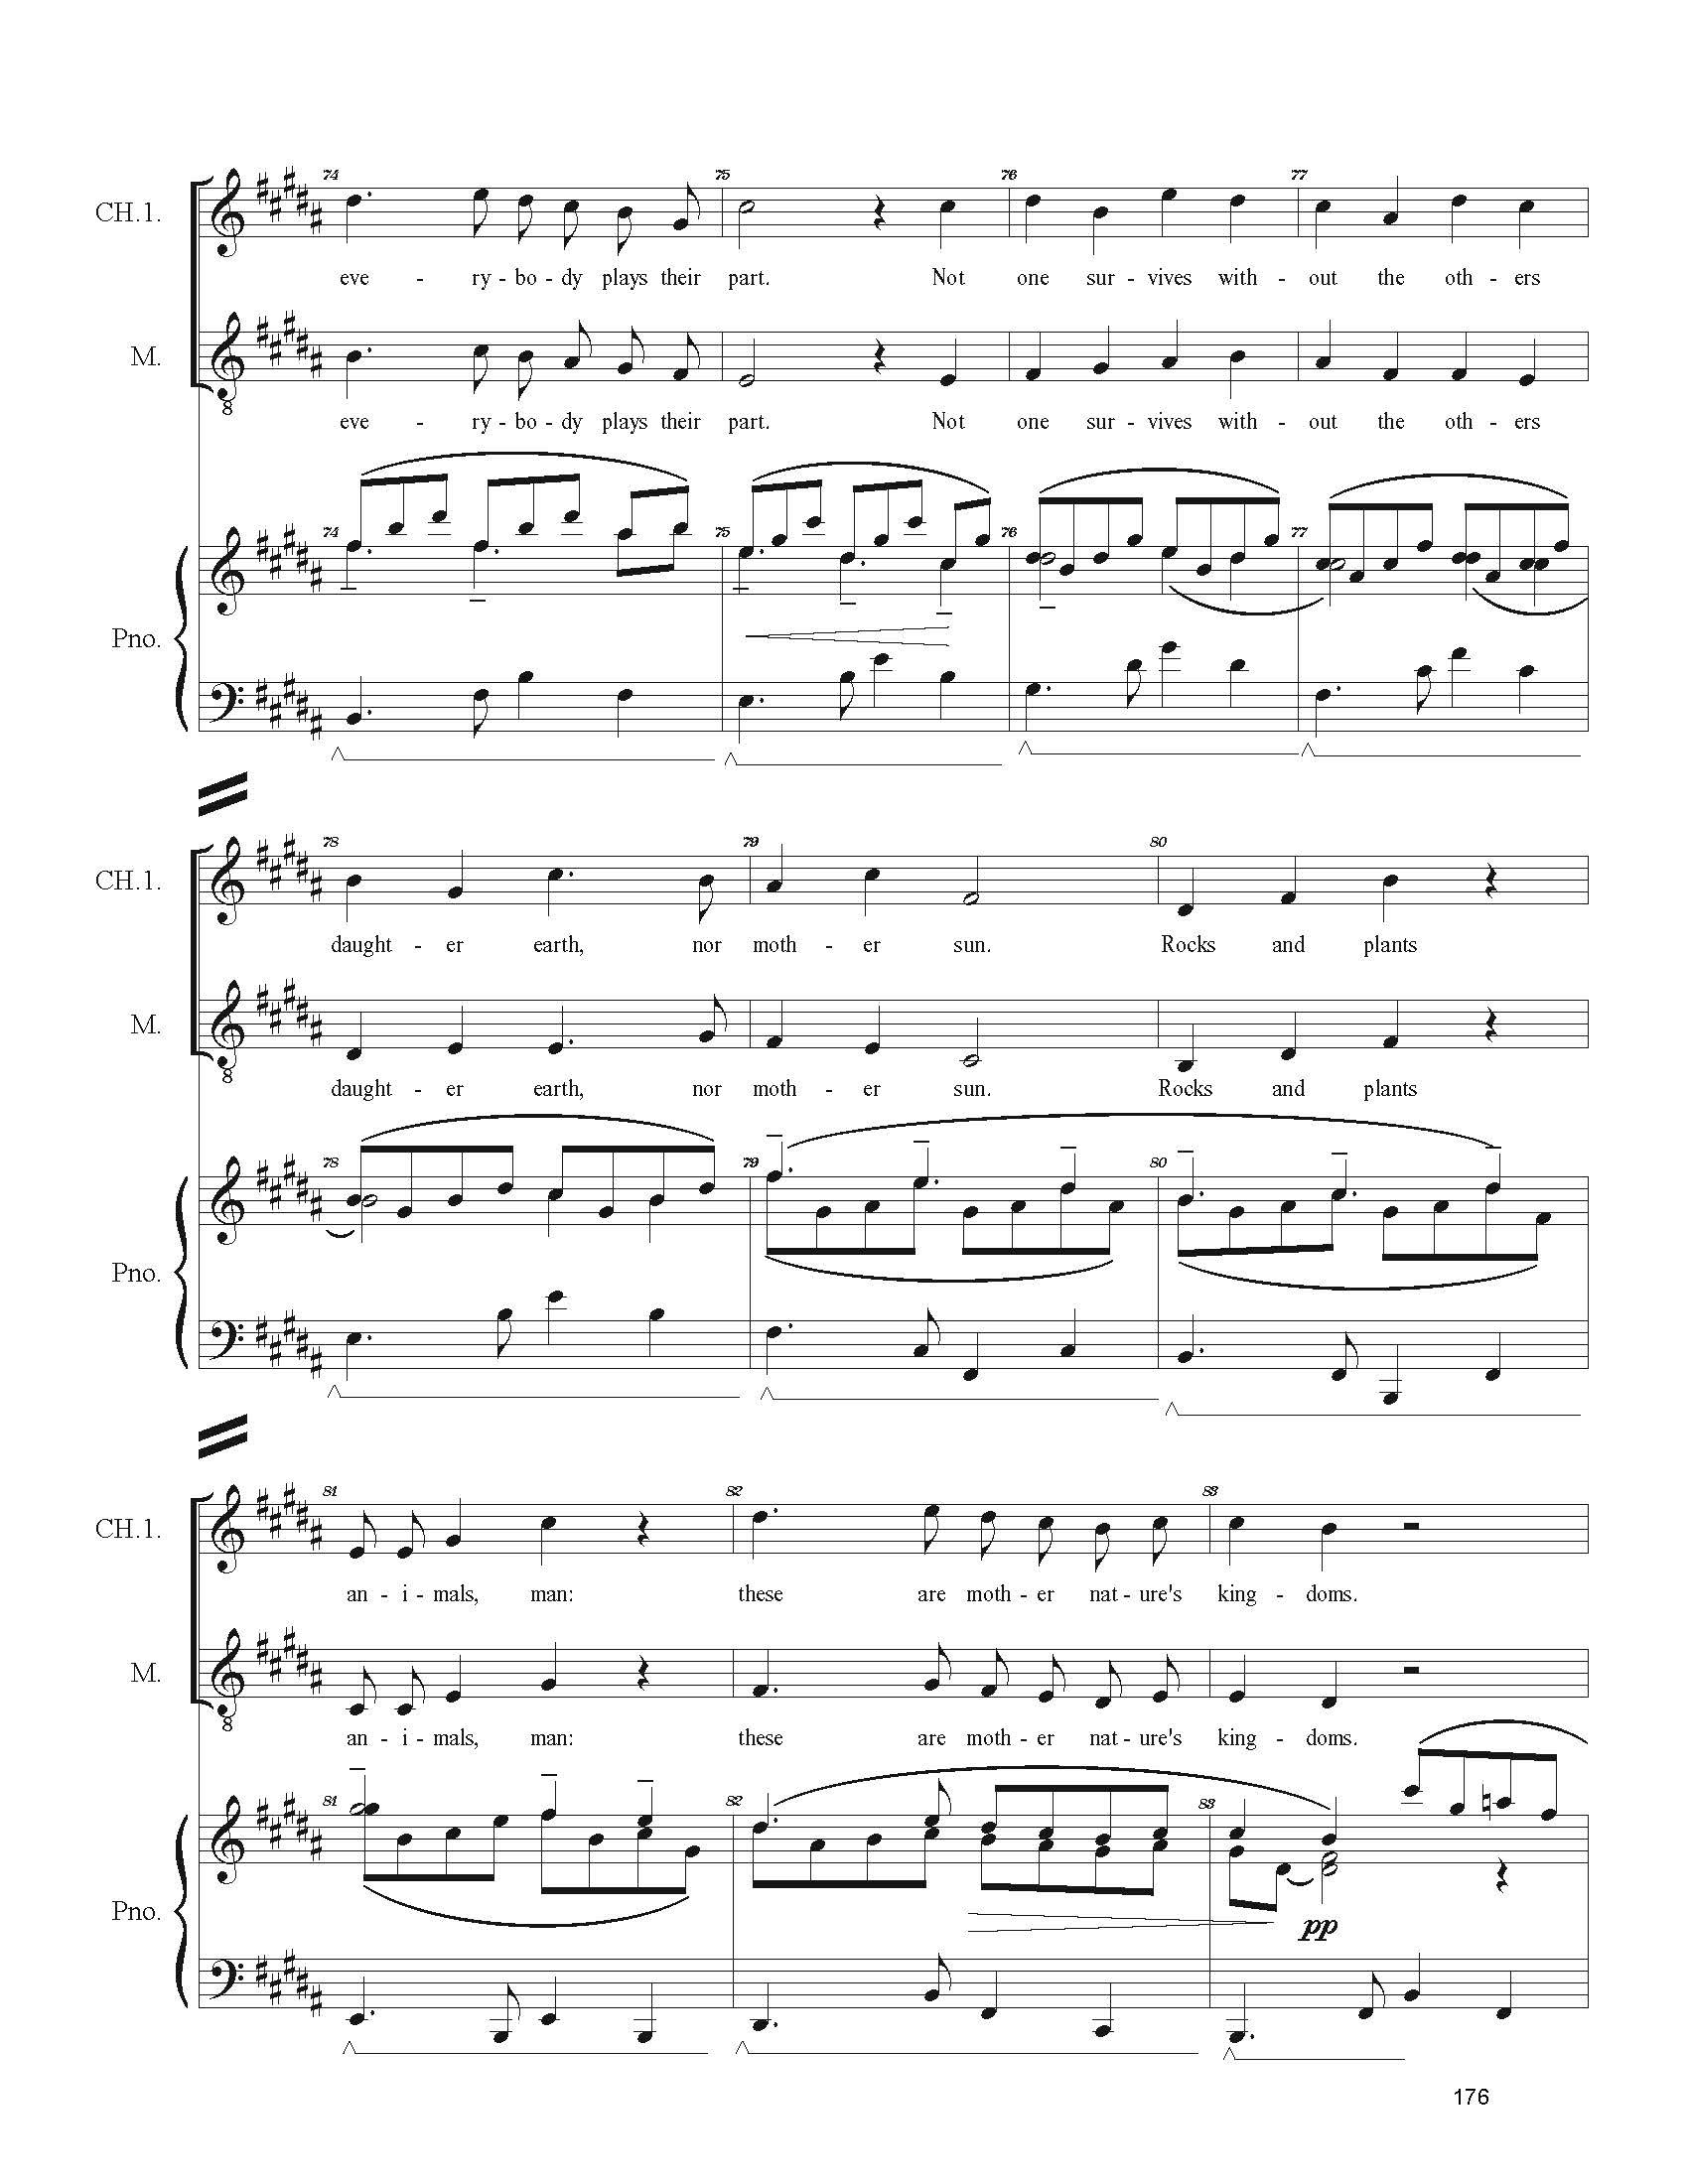 FULL PIANO VOCAL SCORE DRAFT 1 - Score_Page_176.jpg